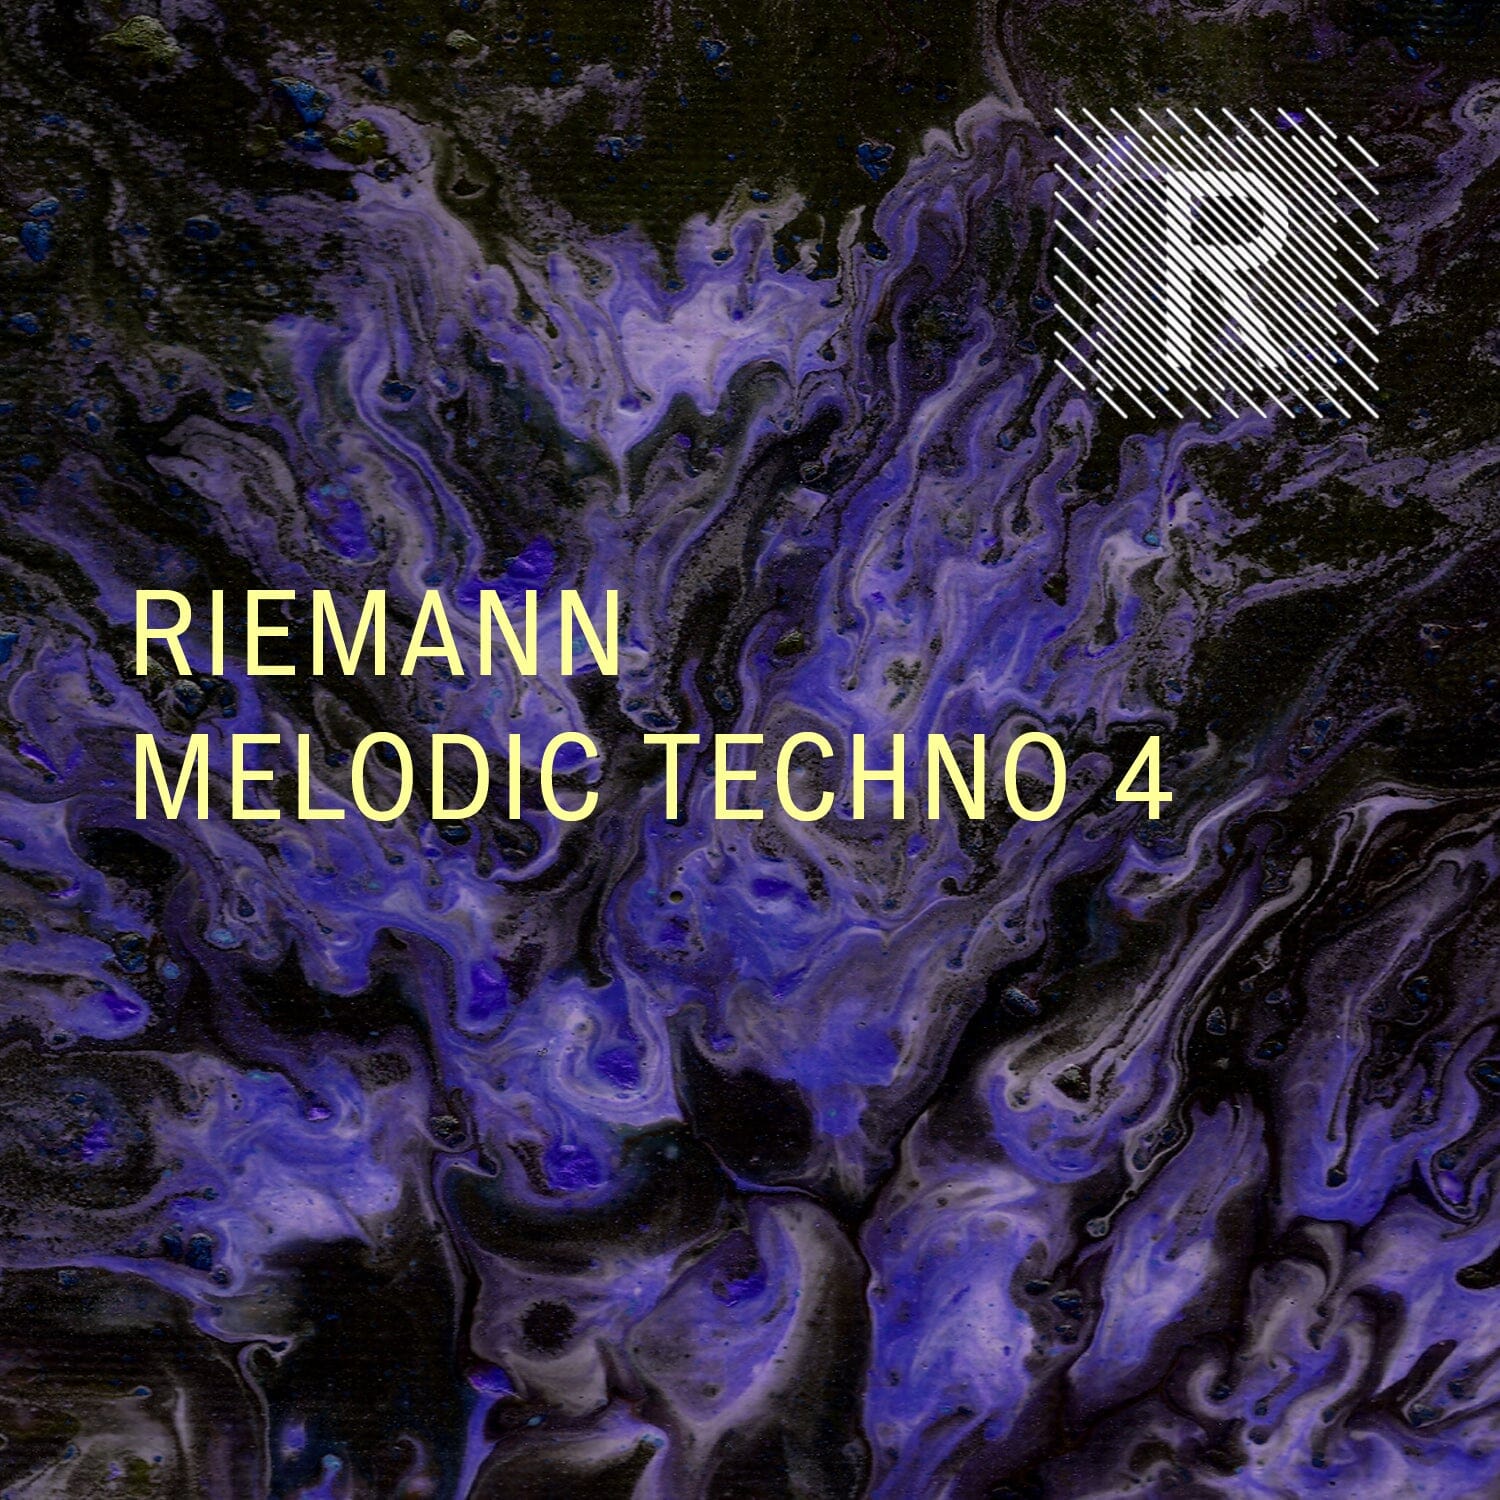 Riemann Melodic Techno 4 - Techno Progressive (One shots - Loops) Sample Pack Riemann Kollektion